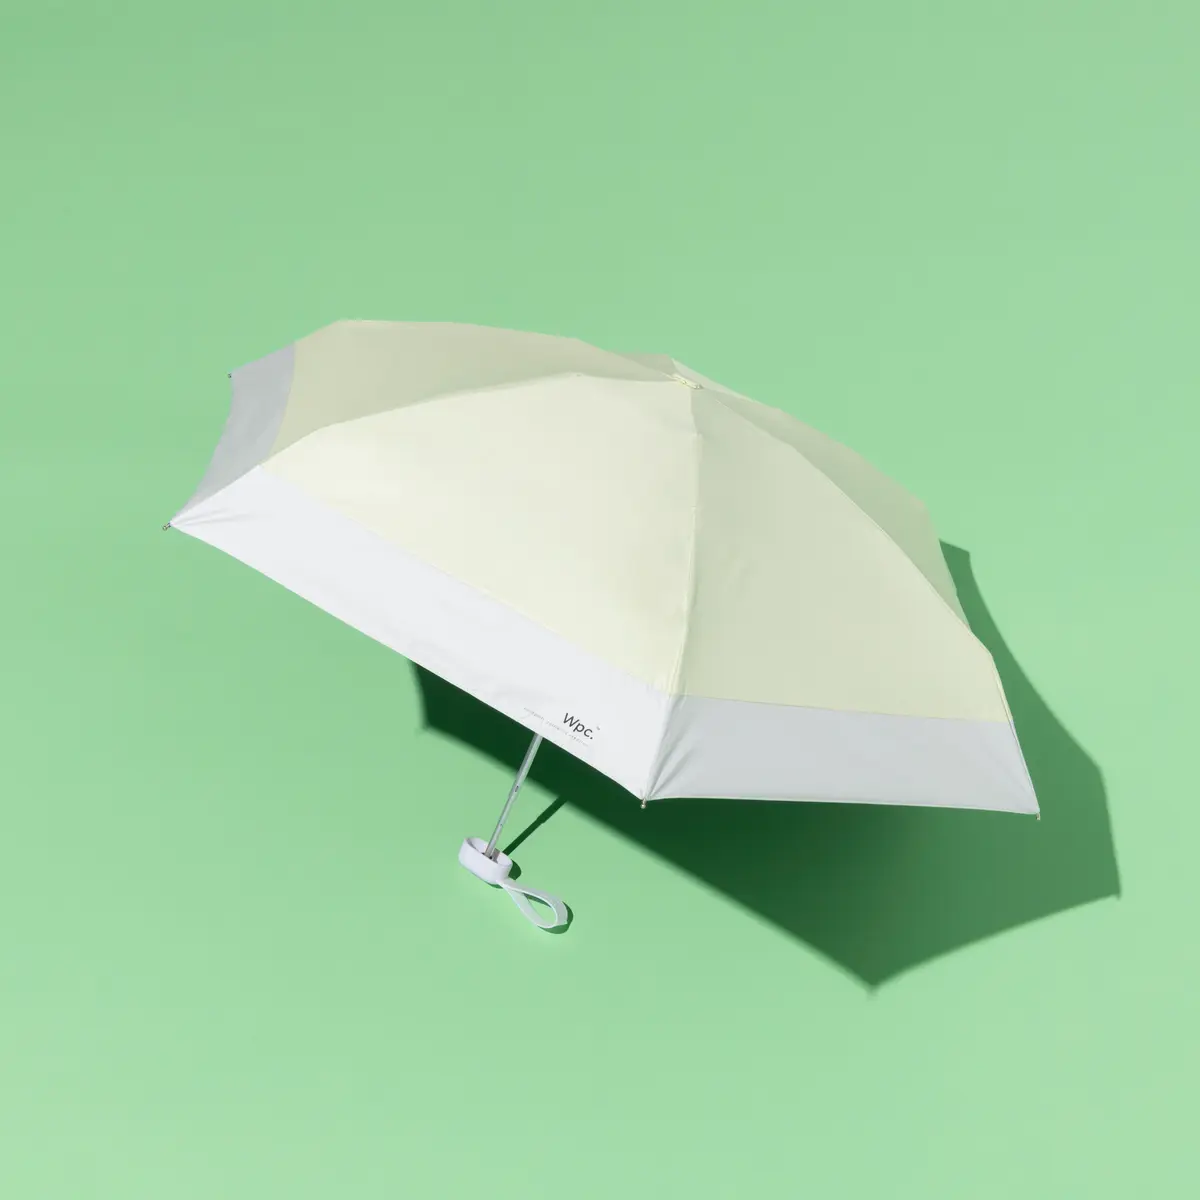 Wpcの日傘の撮りおろし画像